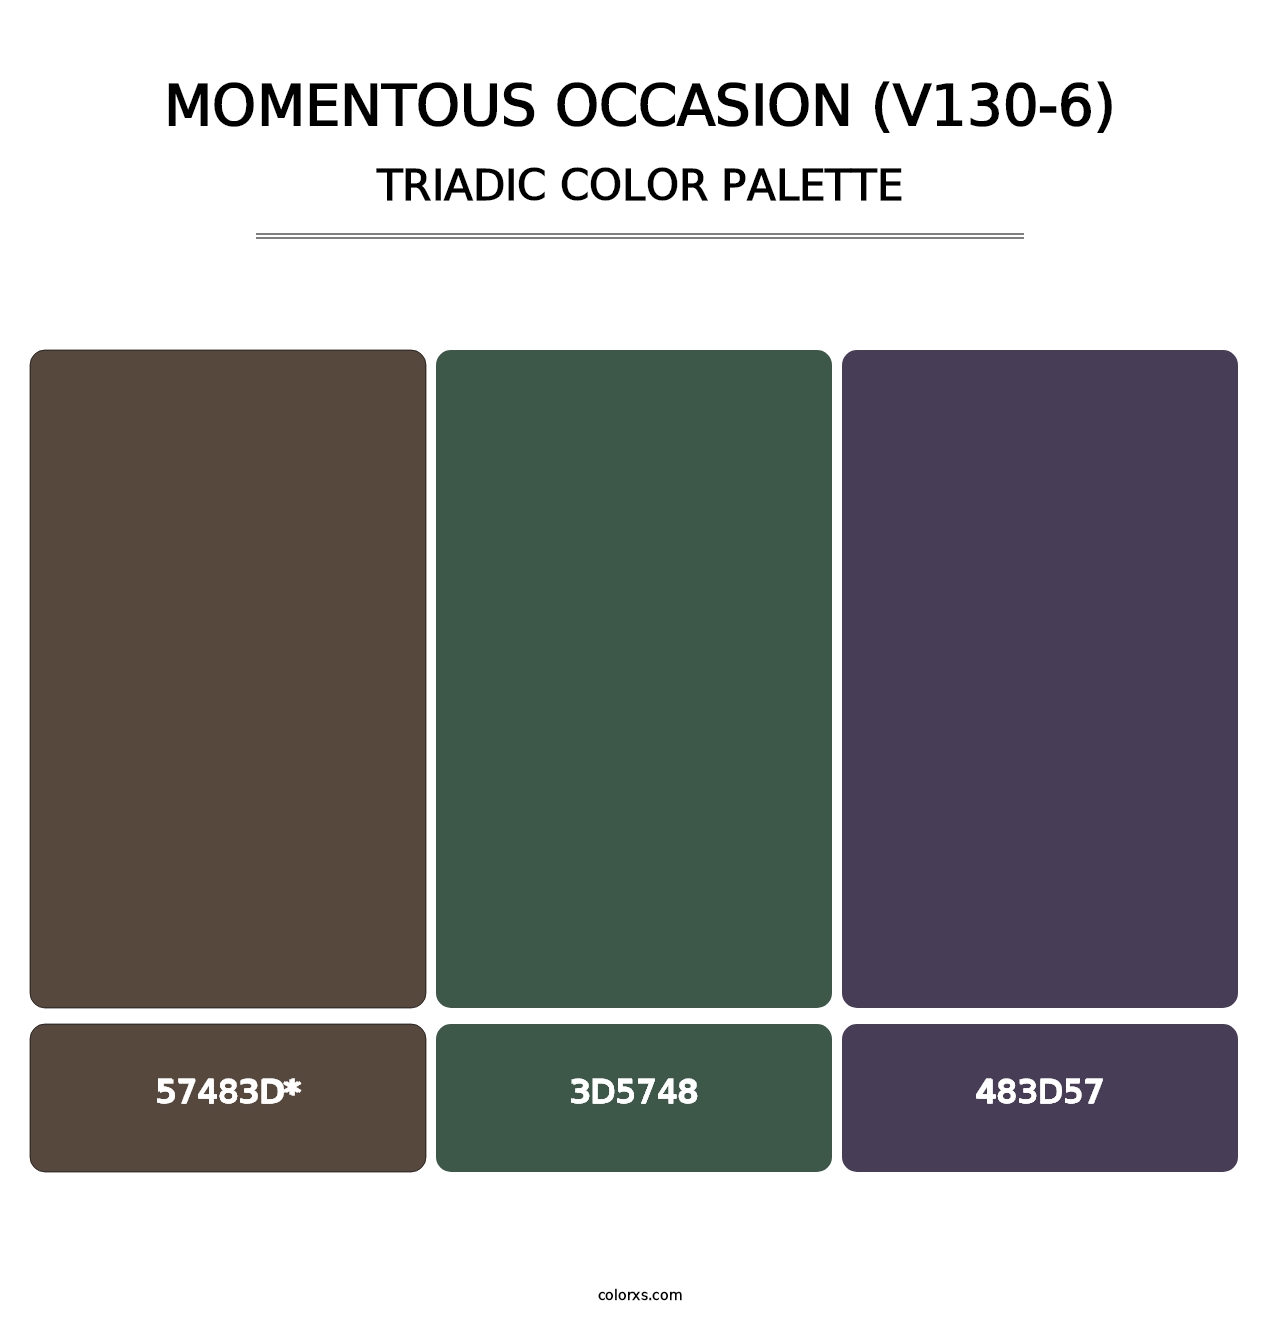 Momentous Occasion (V130-6) - Triadic Color Palette